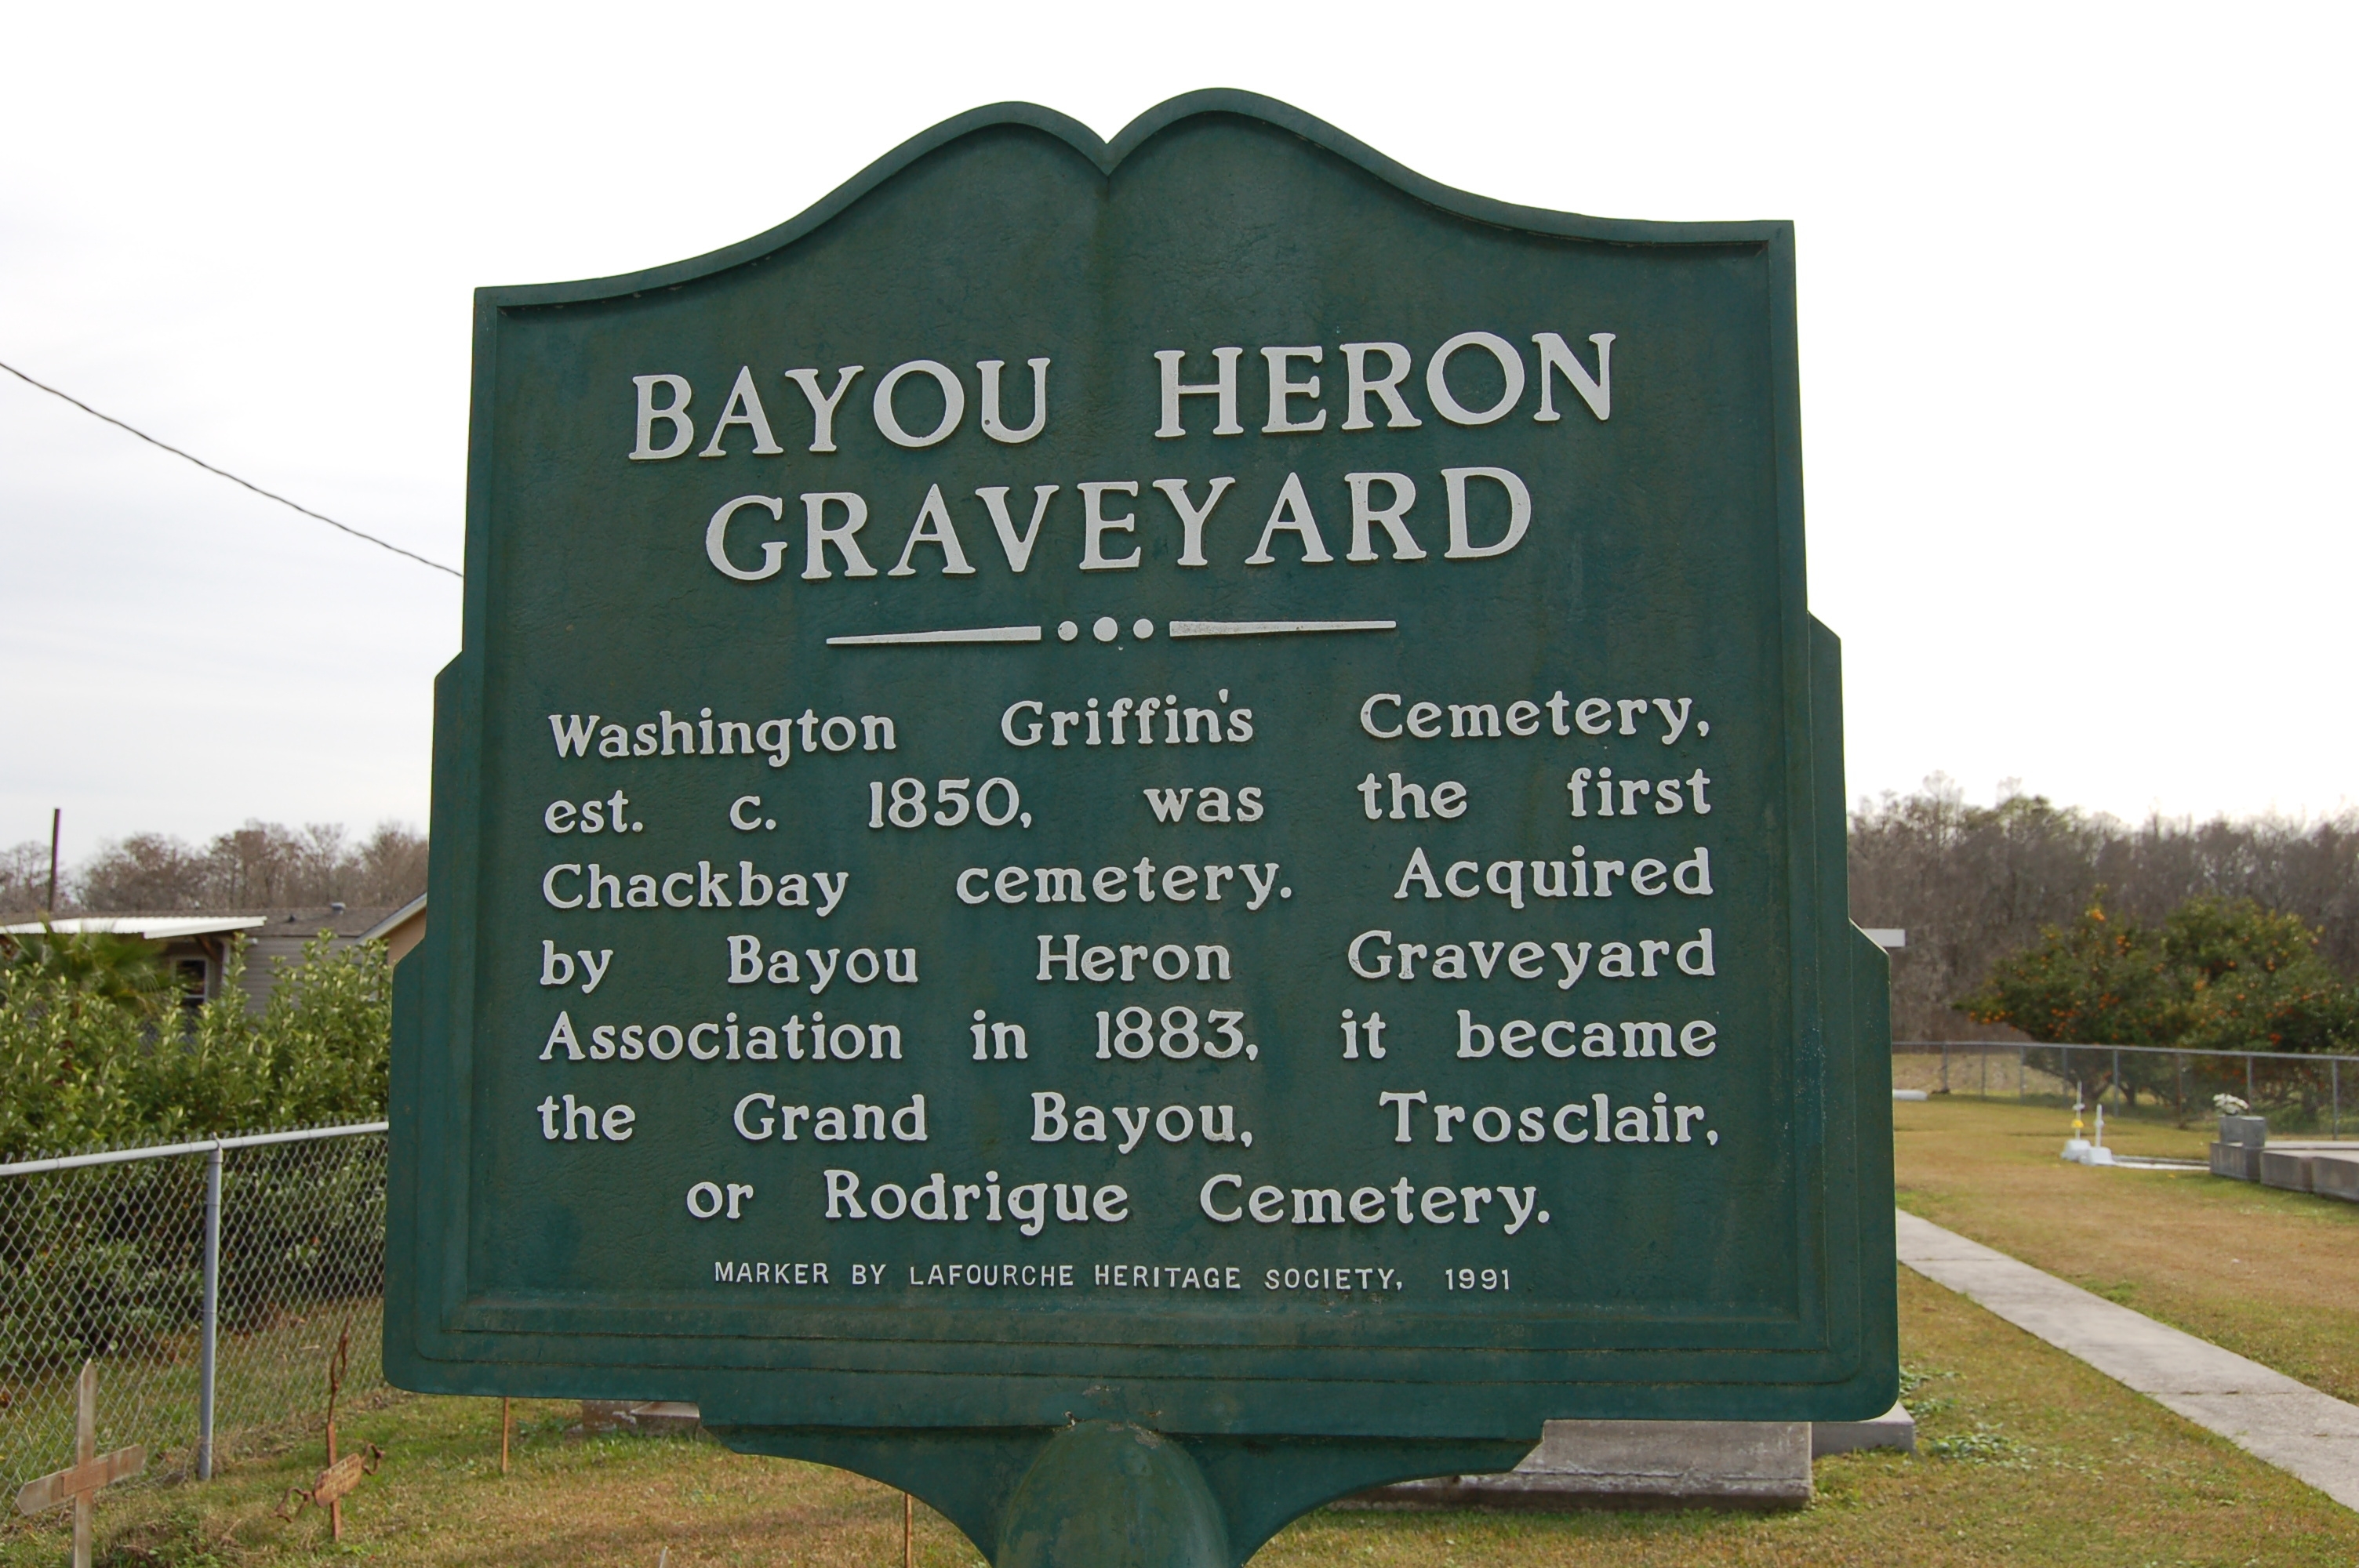 Bayou Heron Graveyard Marker